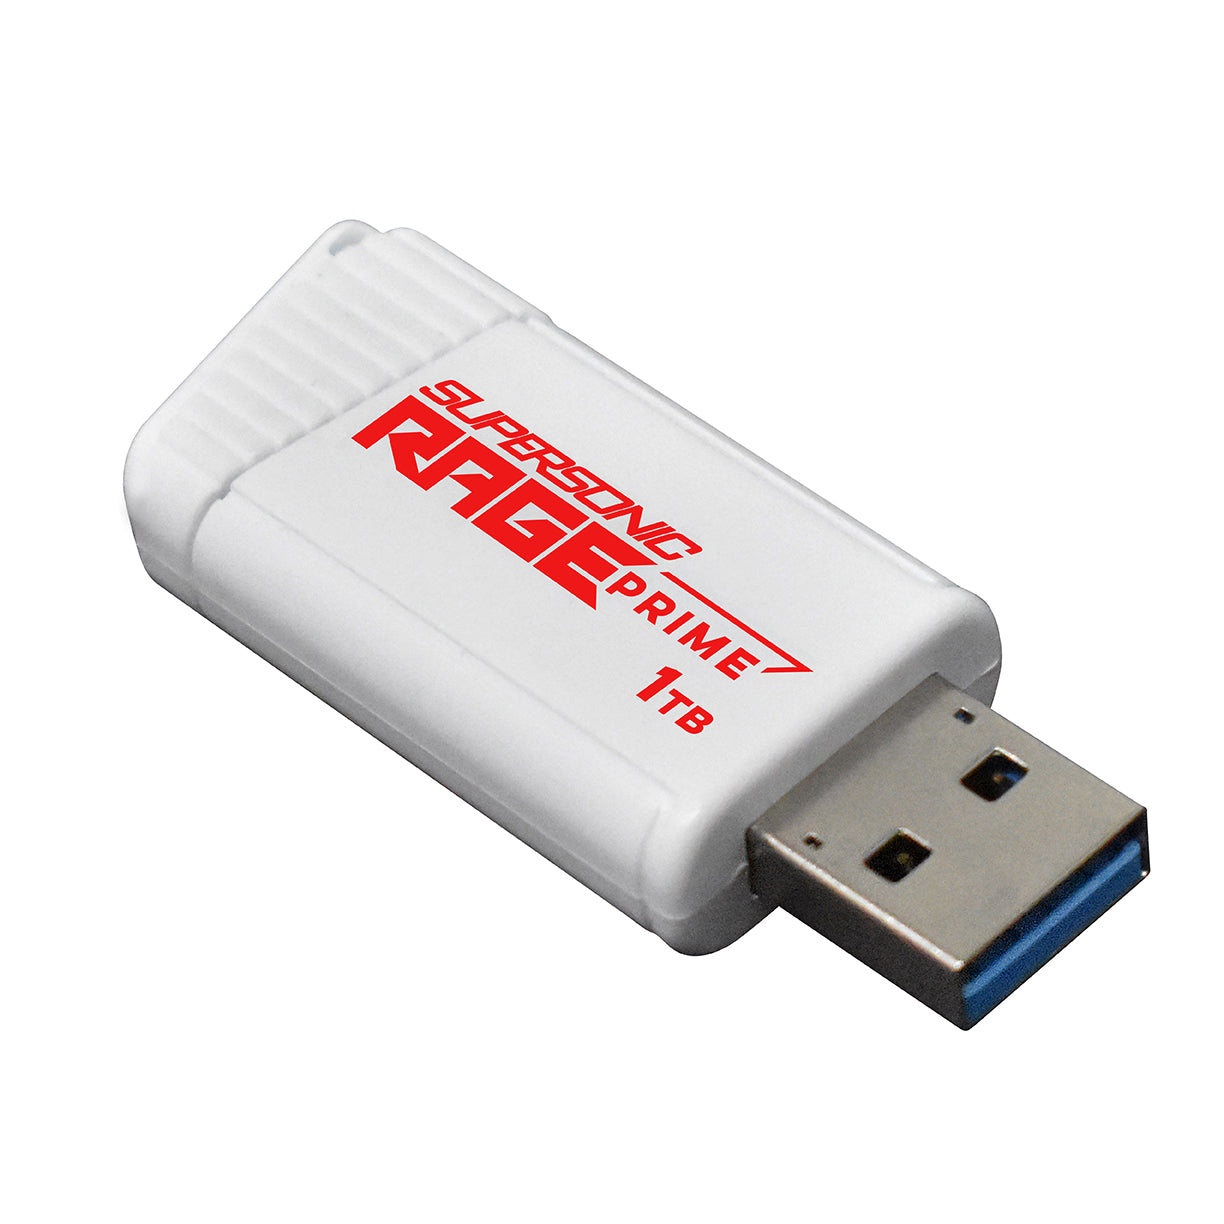 Patriot Supersonic Rage Prime Series - USB 3.2 GEN. 2 Flash Drives